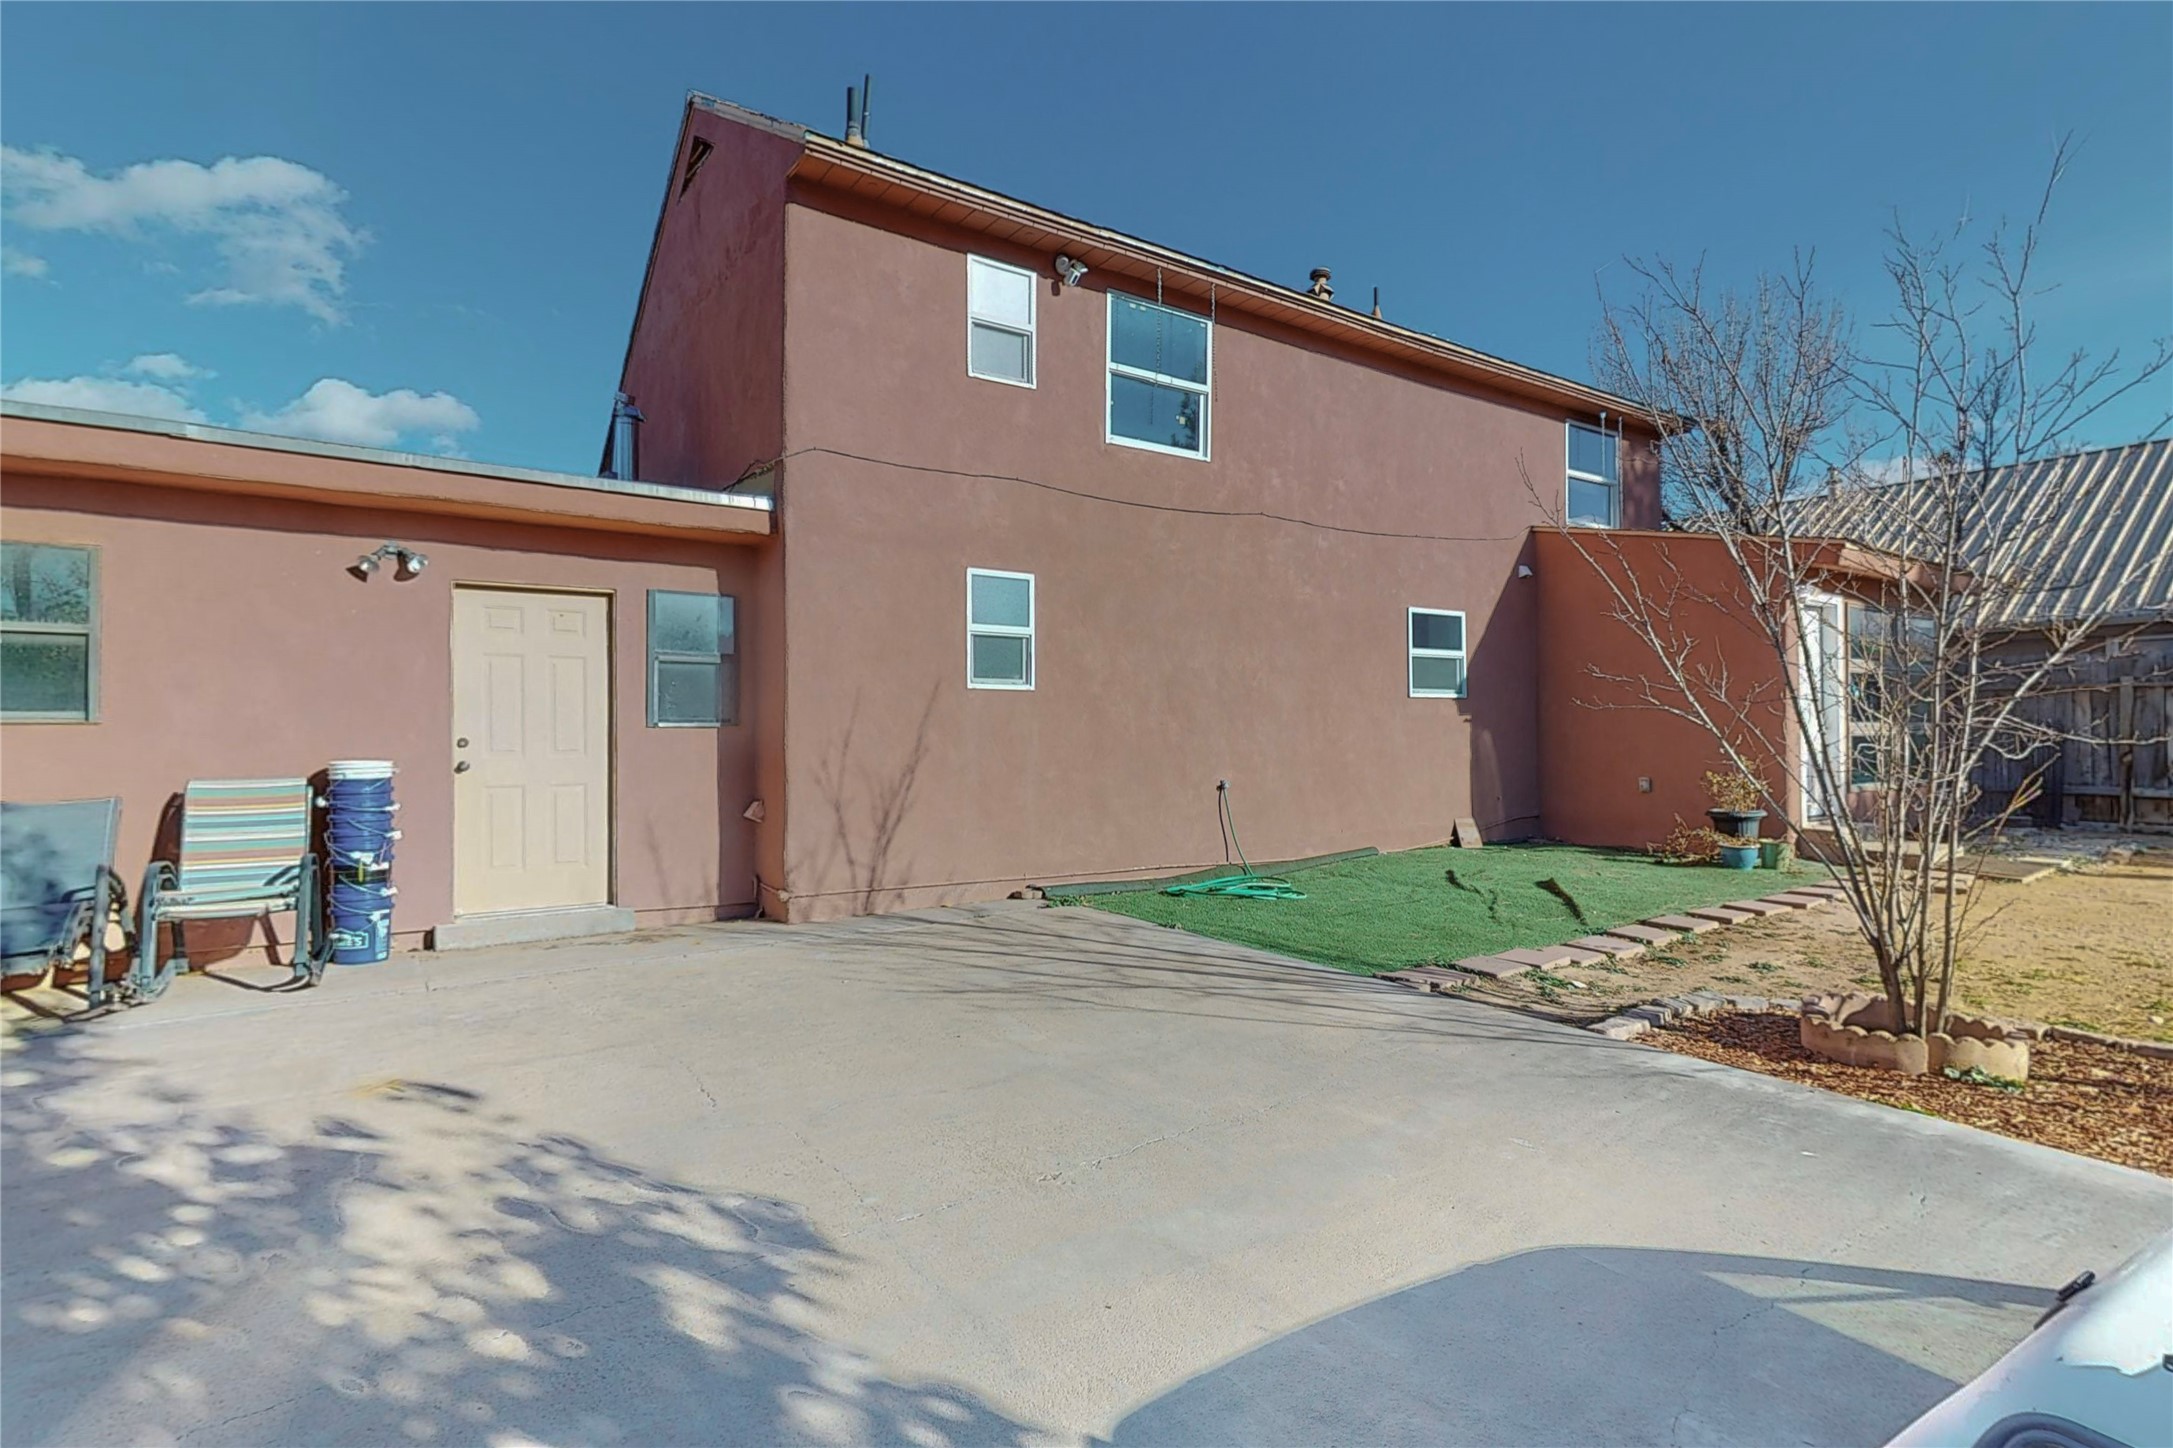 1062 Willow Way, Santa Fe, New Mexico 87507, 3 Bedrooms Bedrooms, ,2 BathroomsBathrooms,Residential,For Sale,1062 Willow Way,202233001